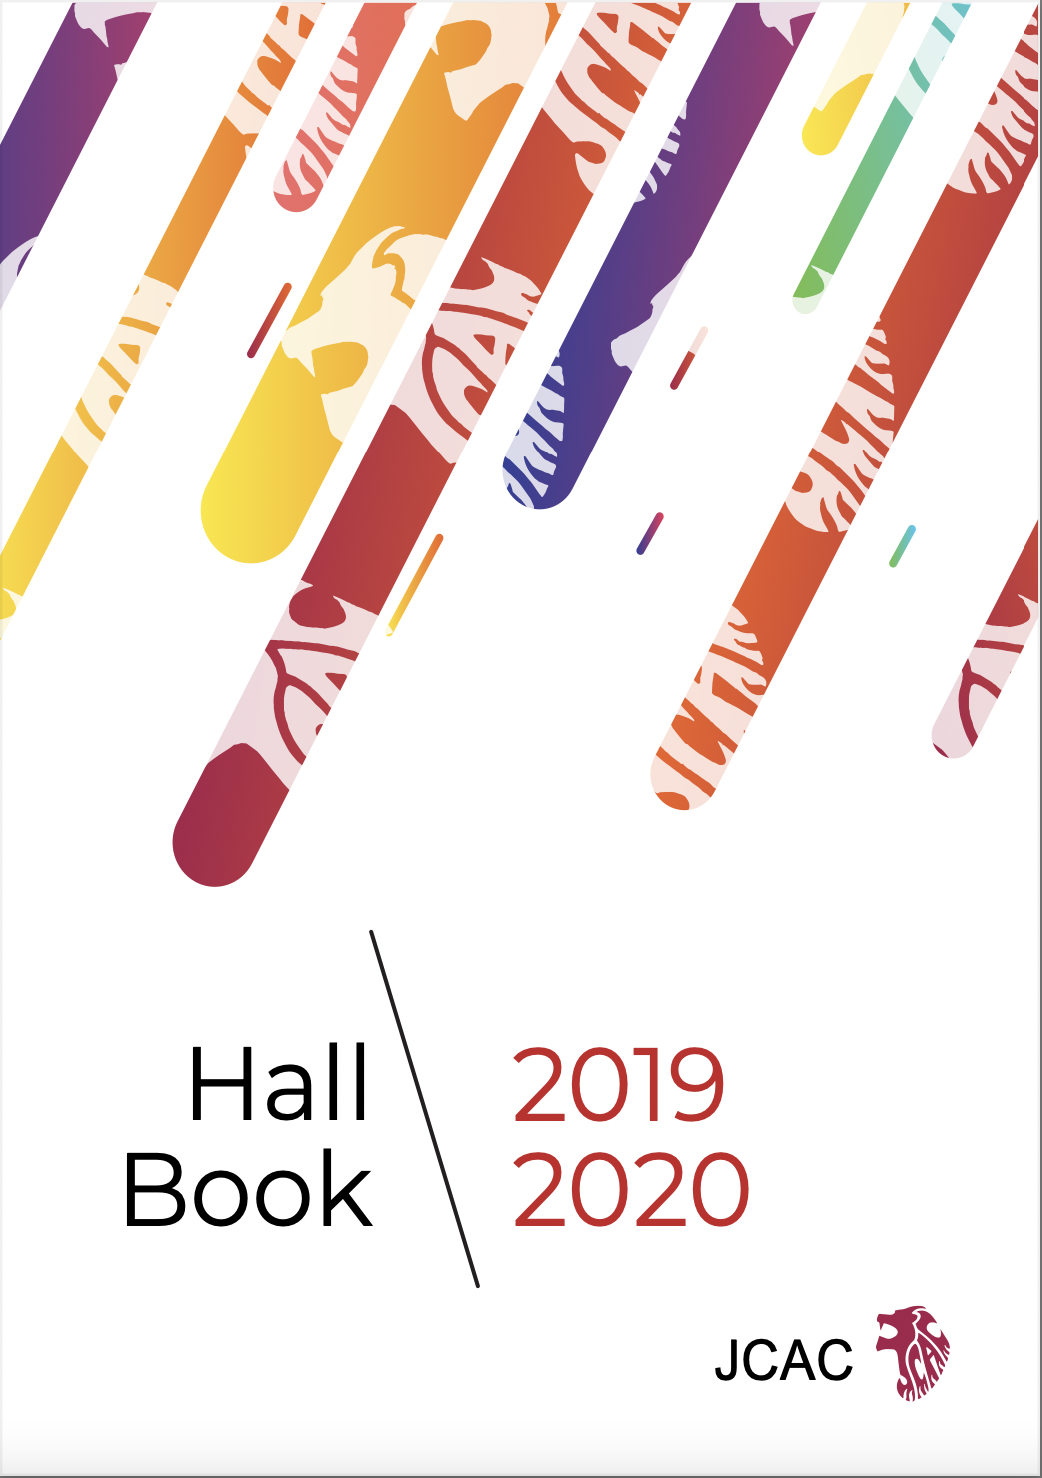 JCAC Hall book 2019-2020